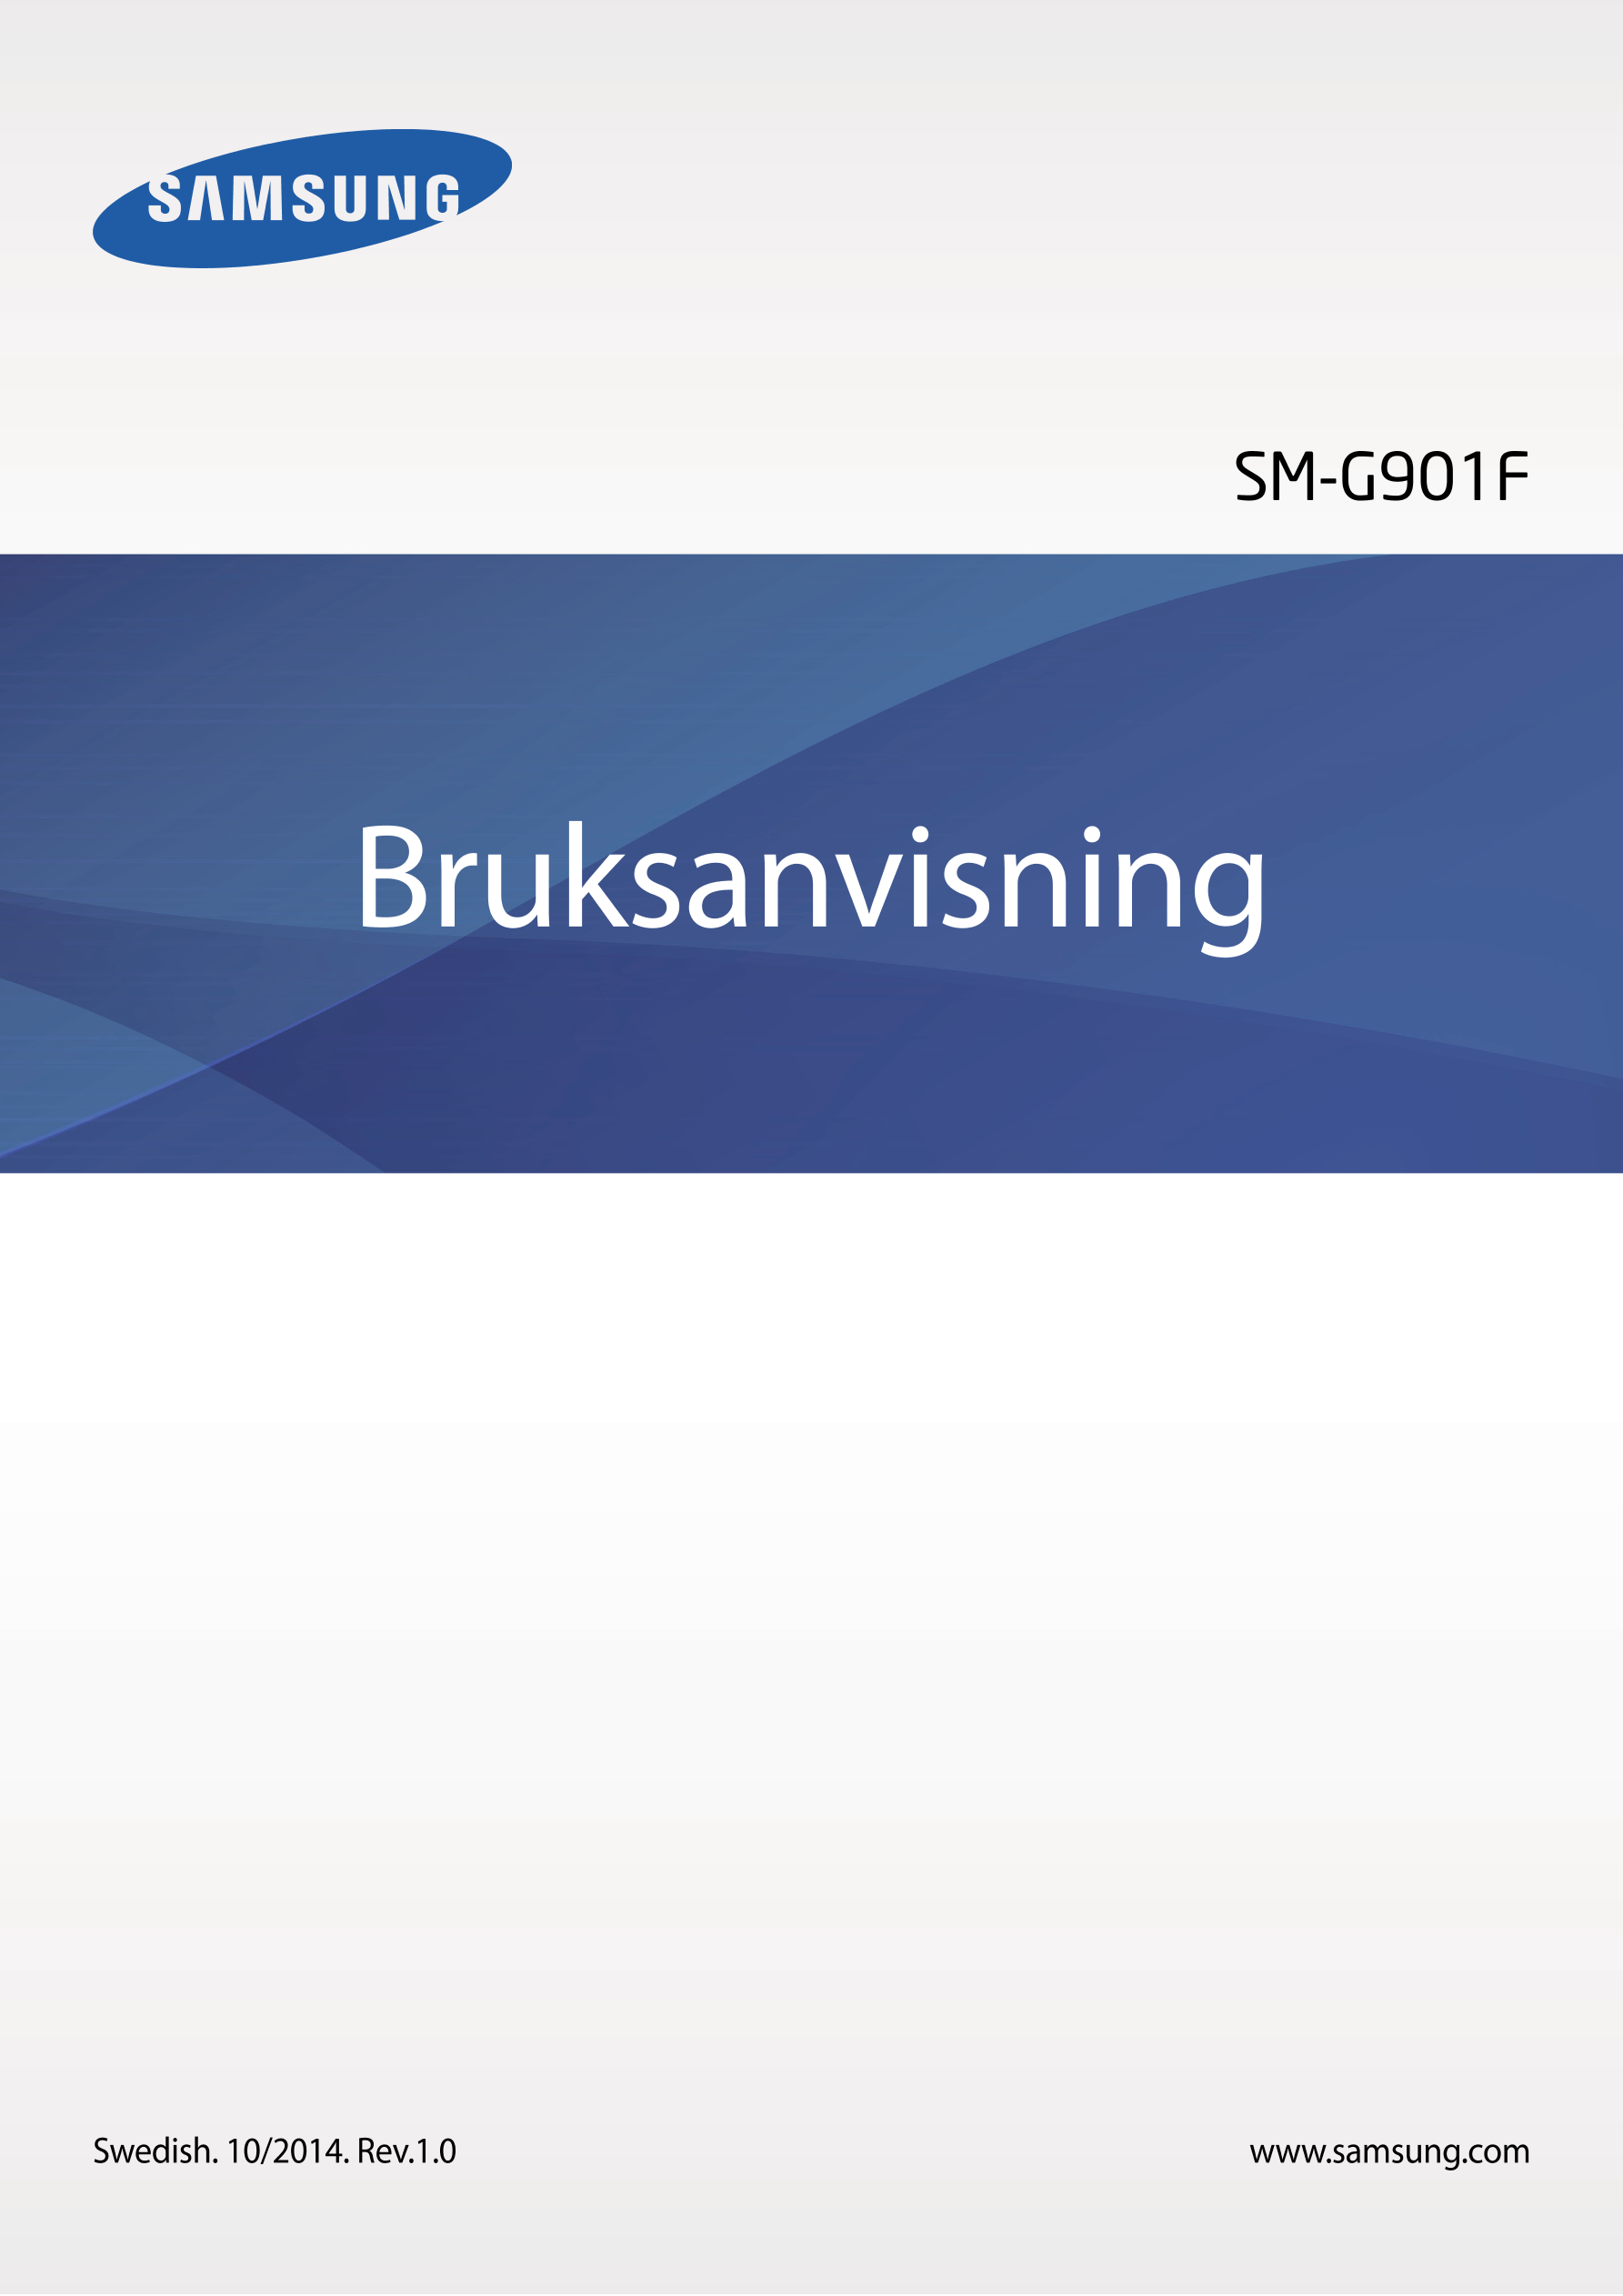 SM-G901F
Bruksanvisning
Swedish.  10/2014. Rev.1.0 www.samsung.com